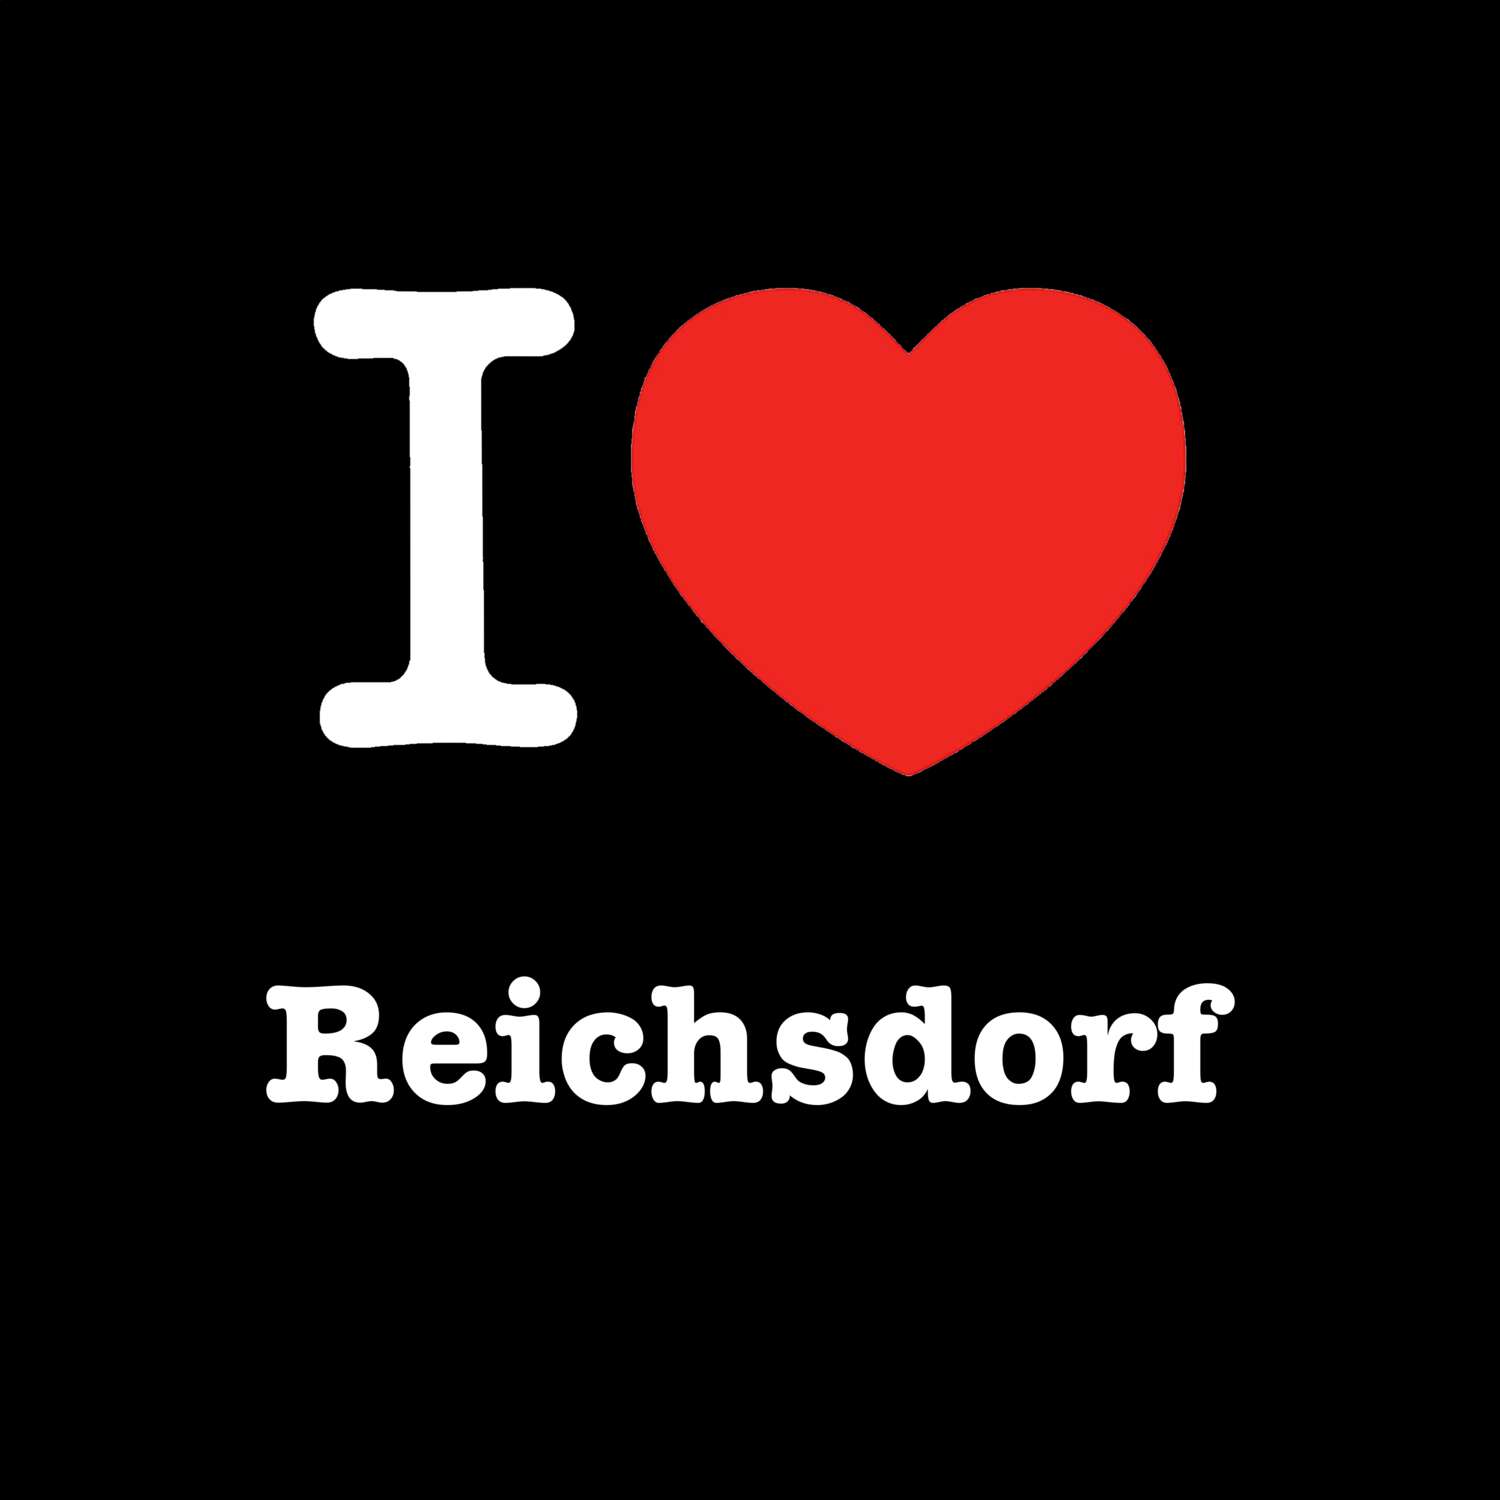 Reichsdorf T-Shirt »I love«